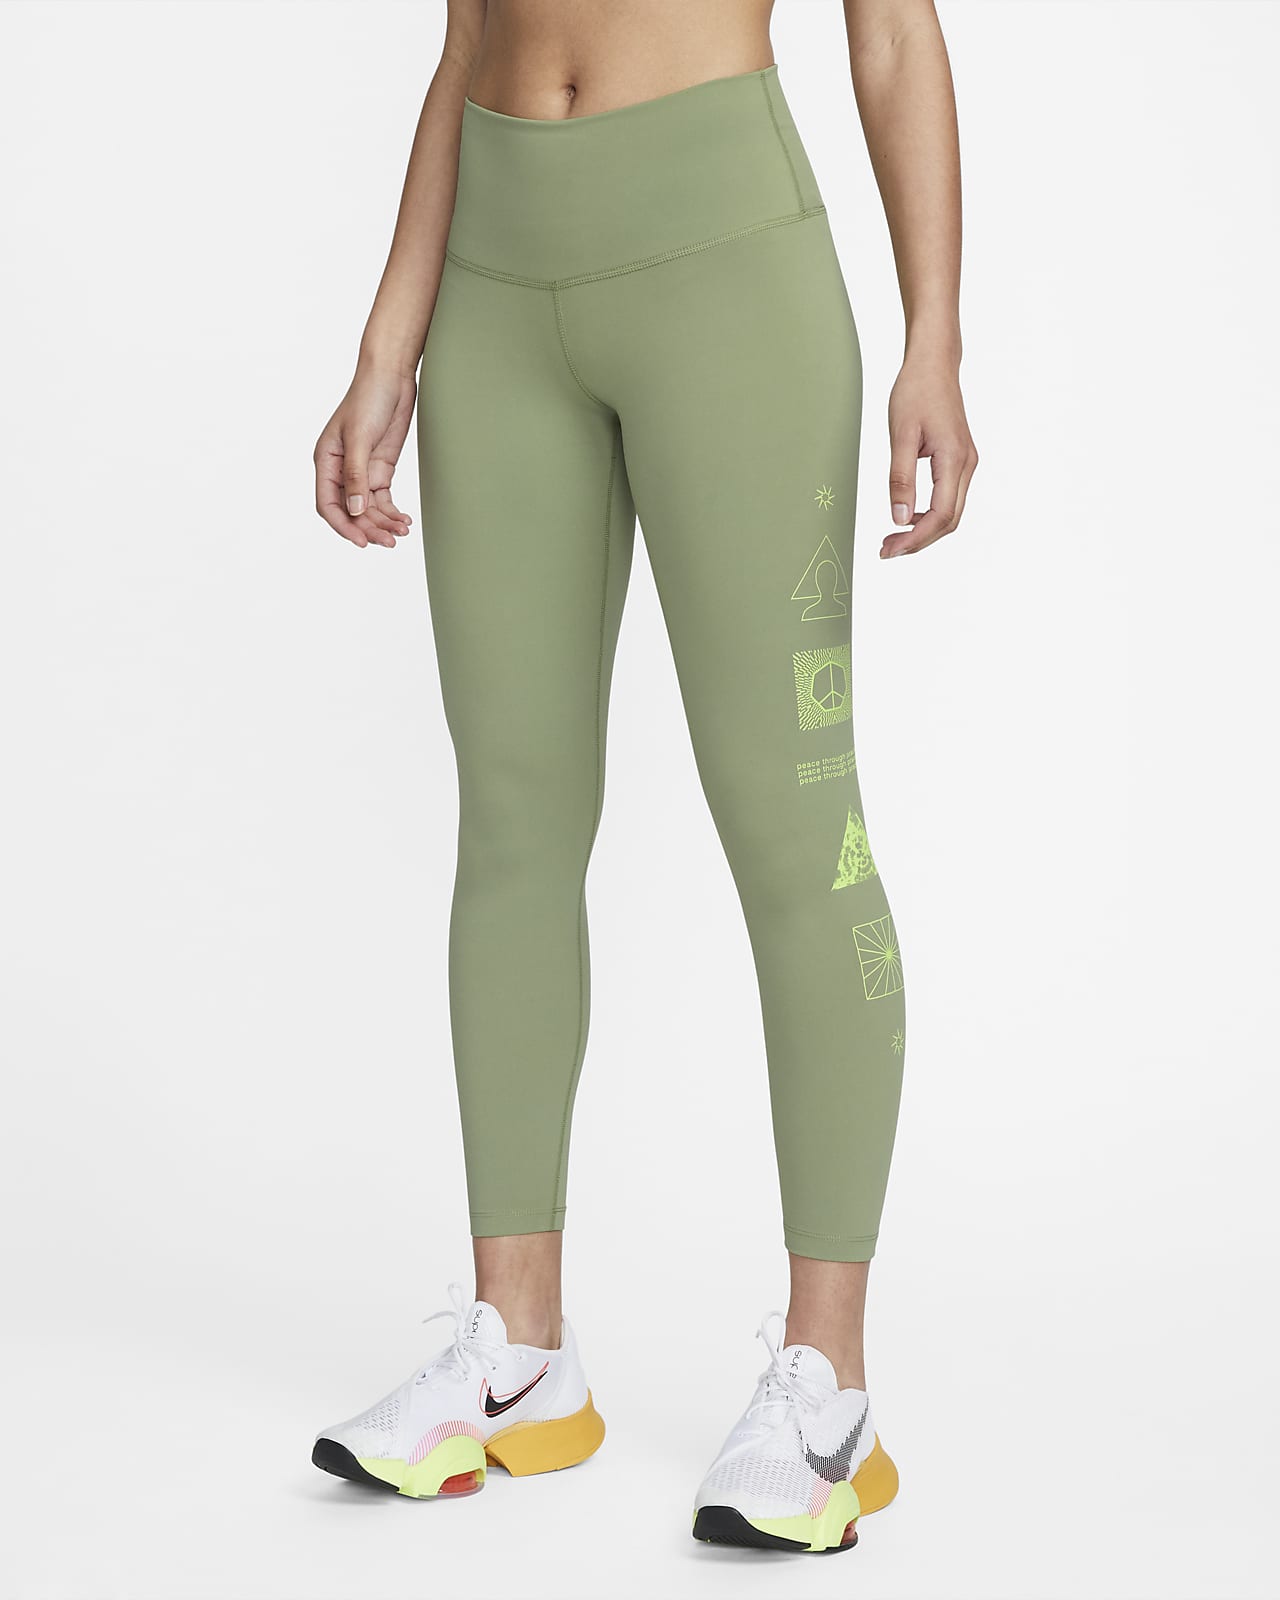 Nike Yoga Women's 7/8 High-Rise Graphic Leggings